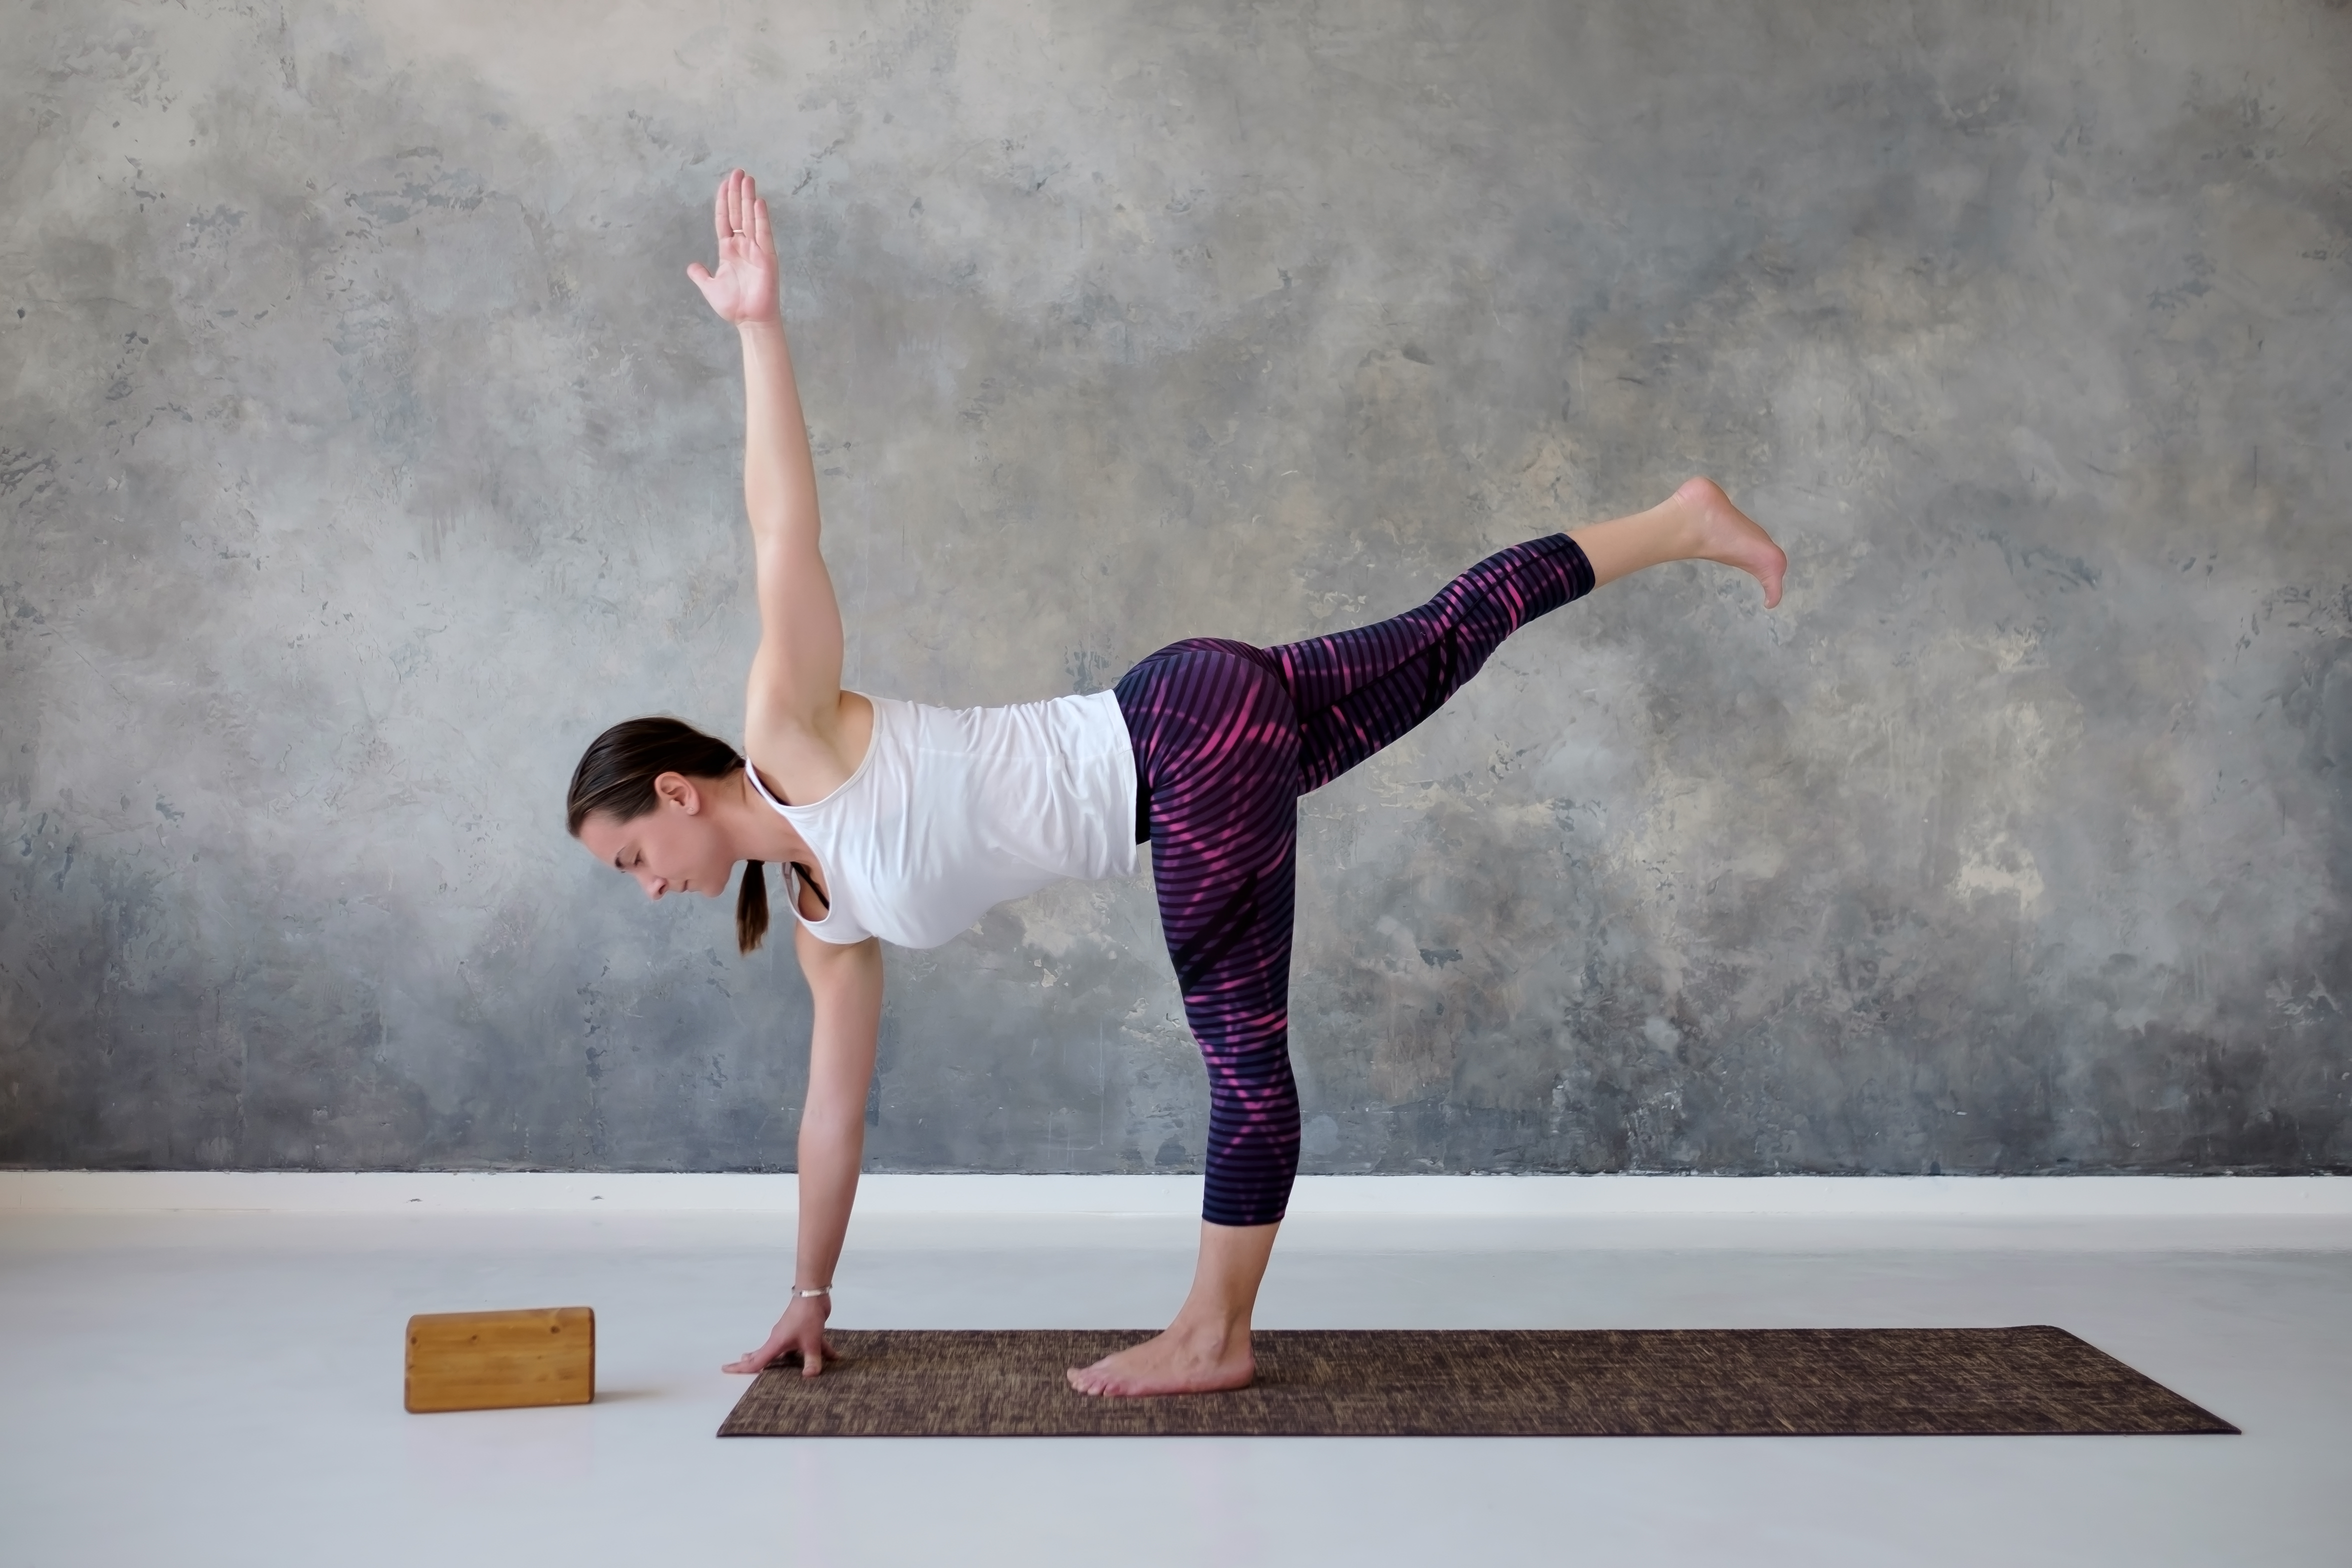 Vinyasa Yoga Flow  Yoga For Strength, Balance & Energy 